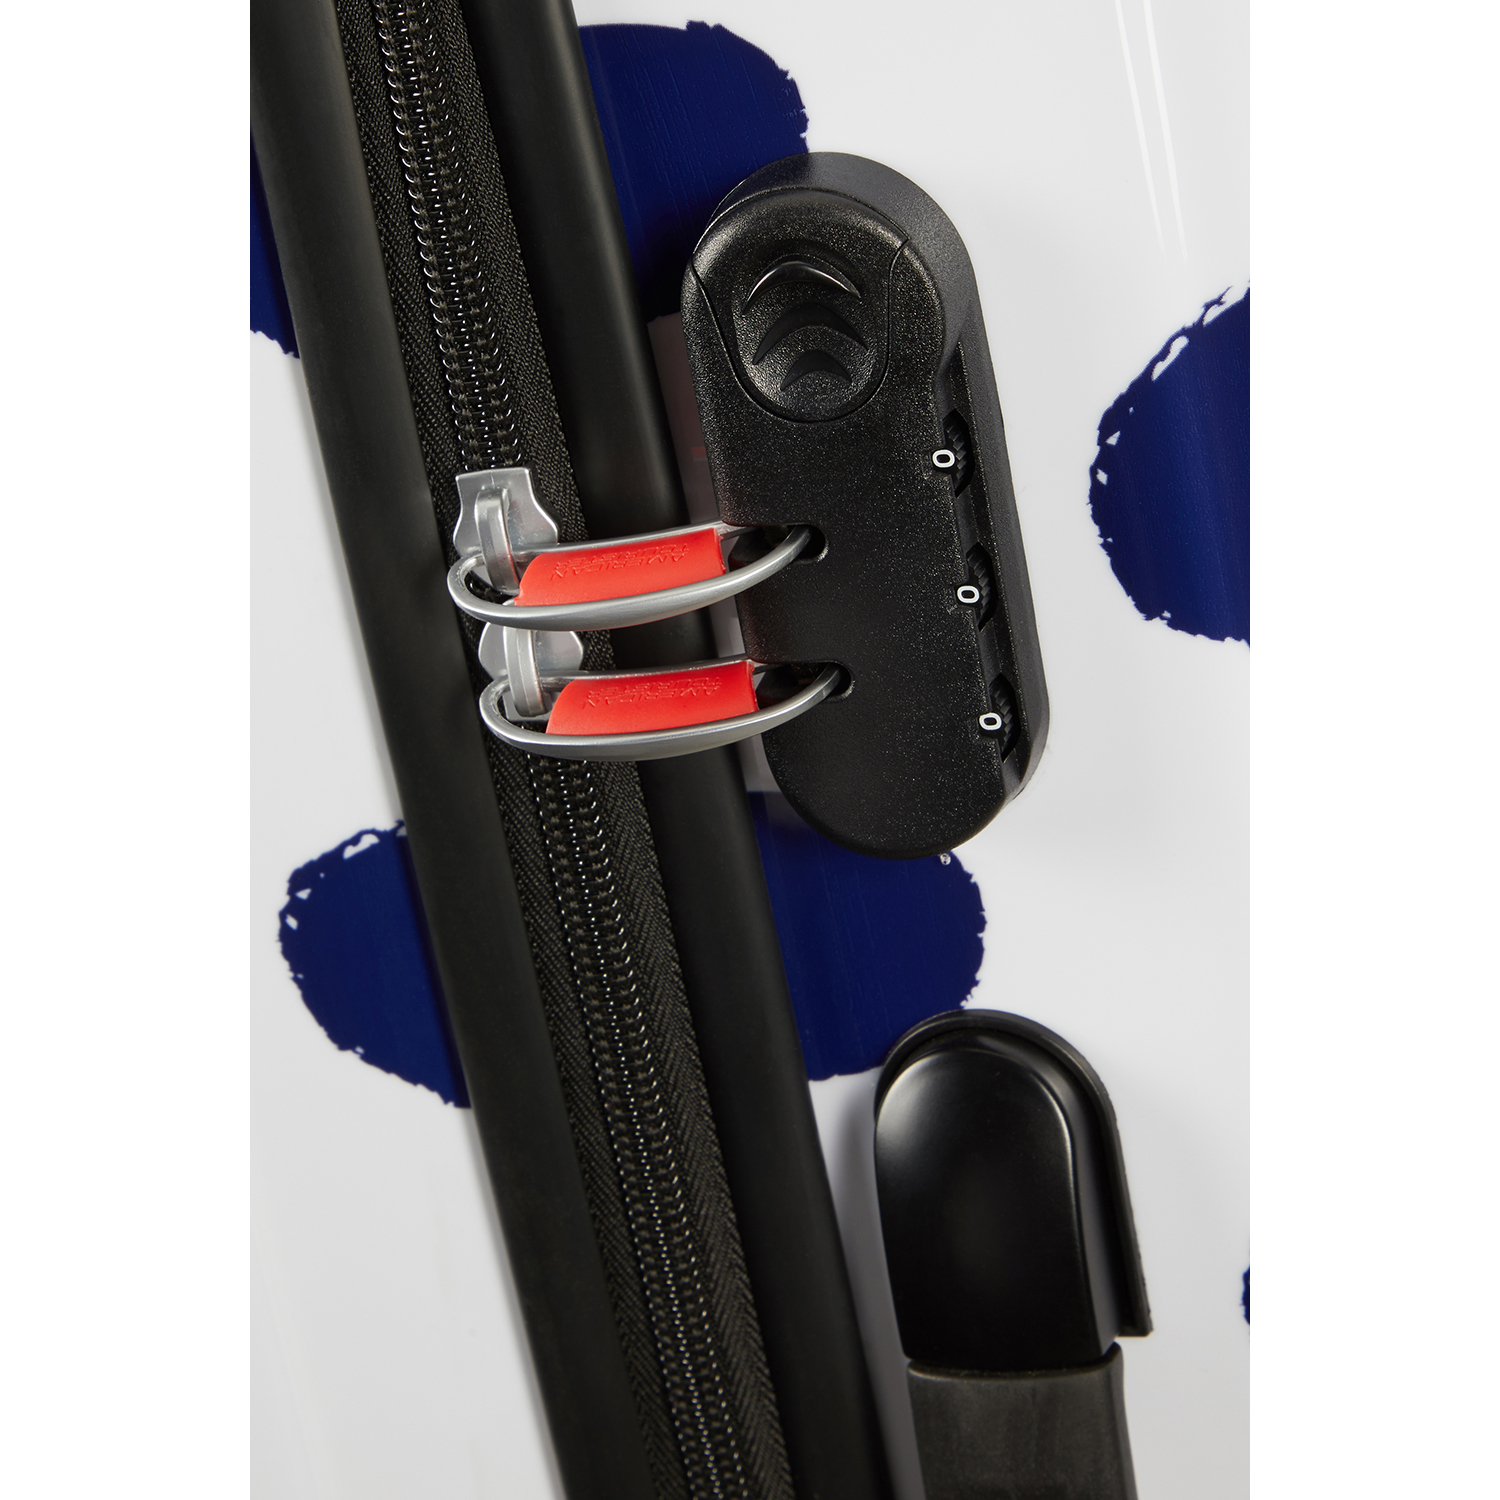 DISNEY LEGENDS-SPINNER 4 Tekerlekli Kabin Boy Valiz 55cm S19C-019-SF000*71